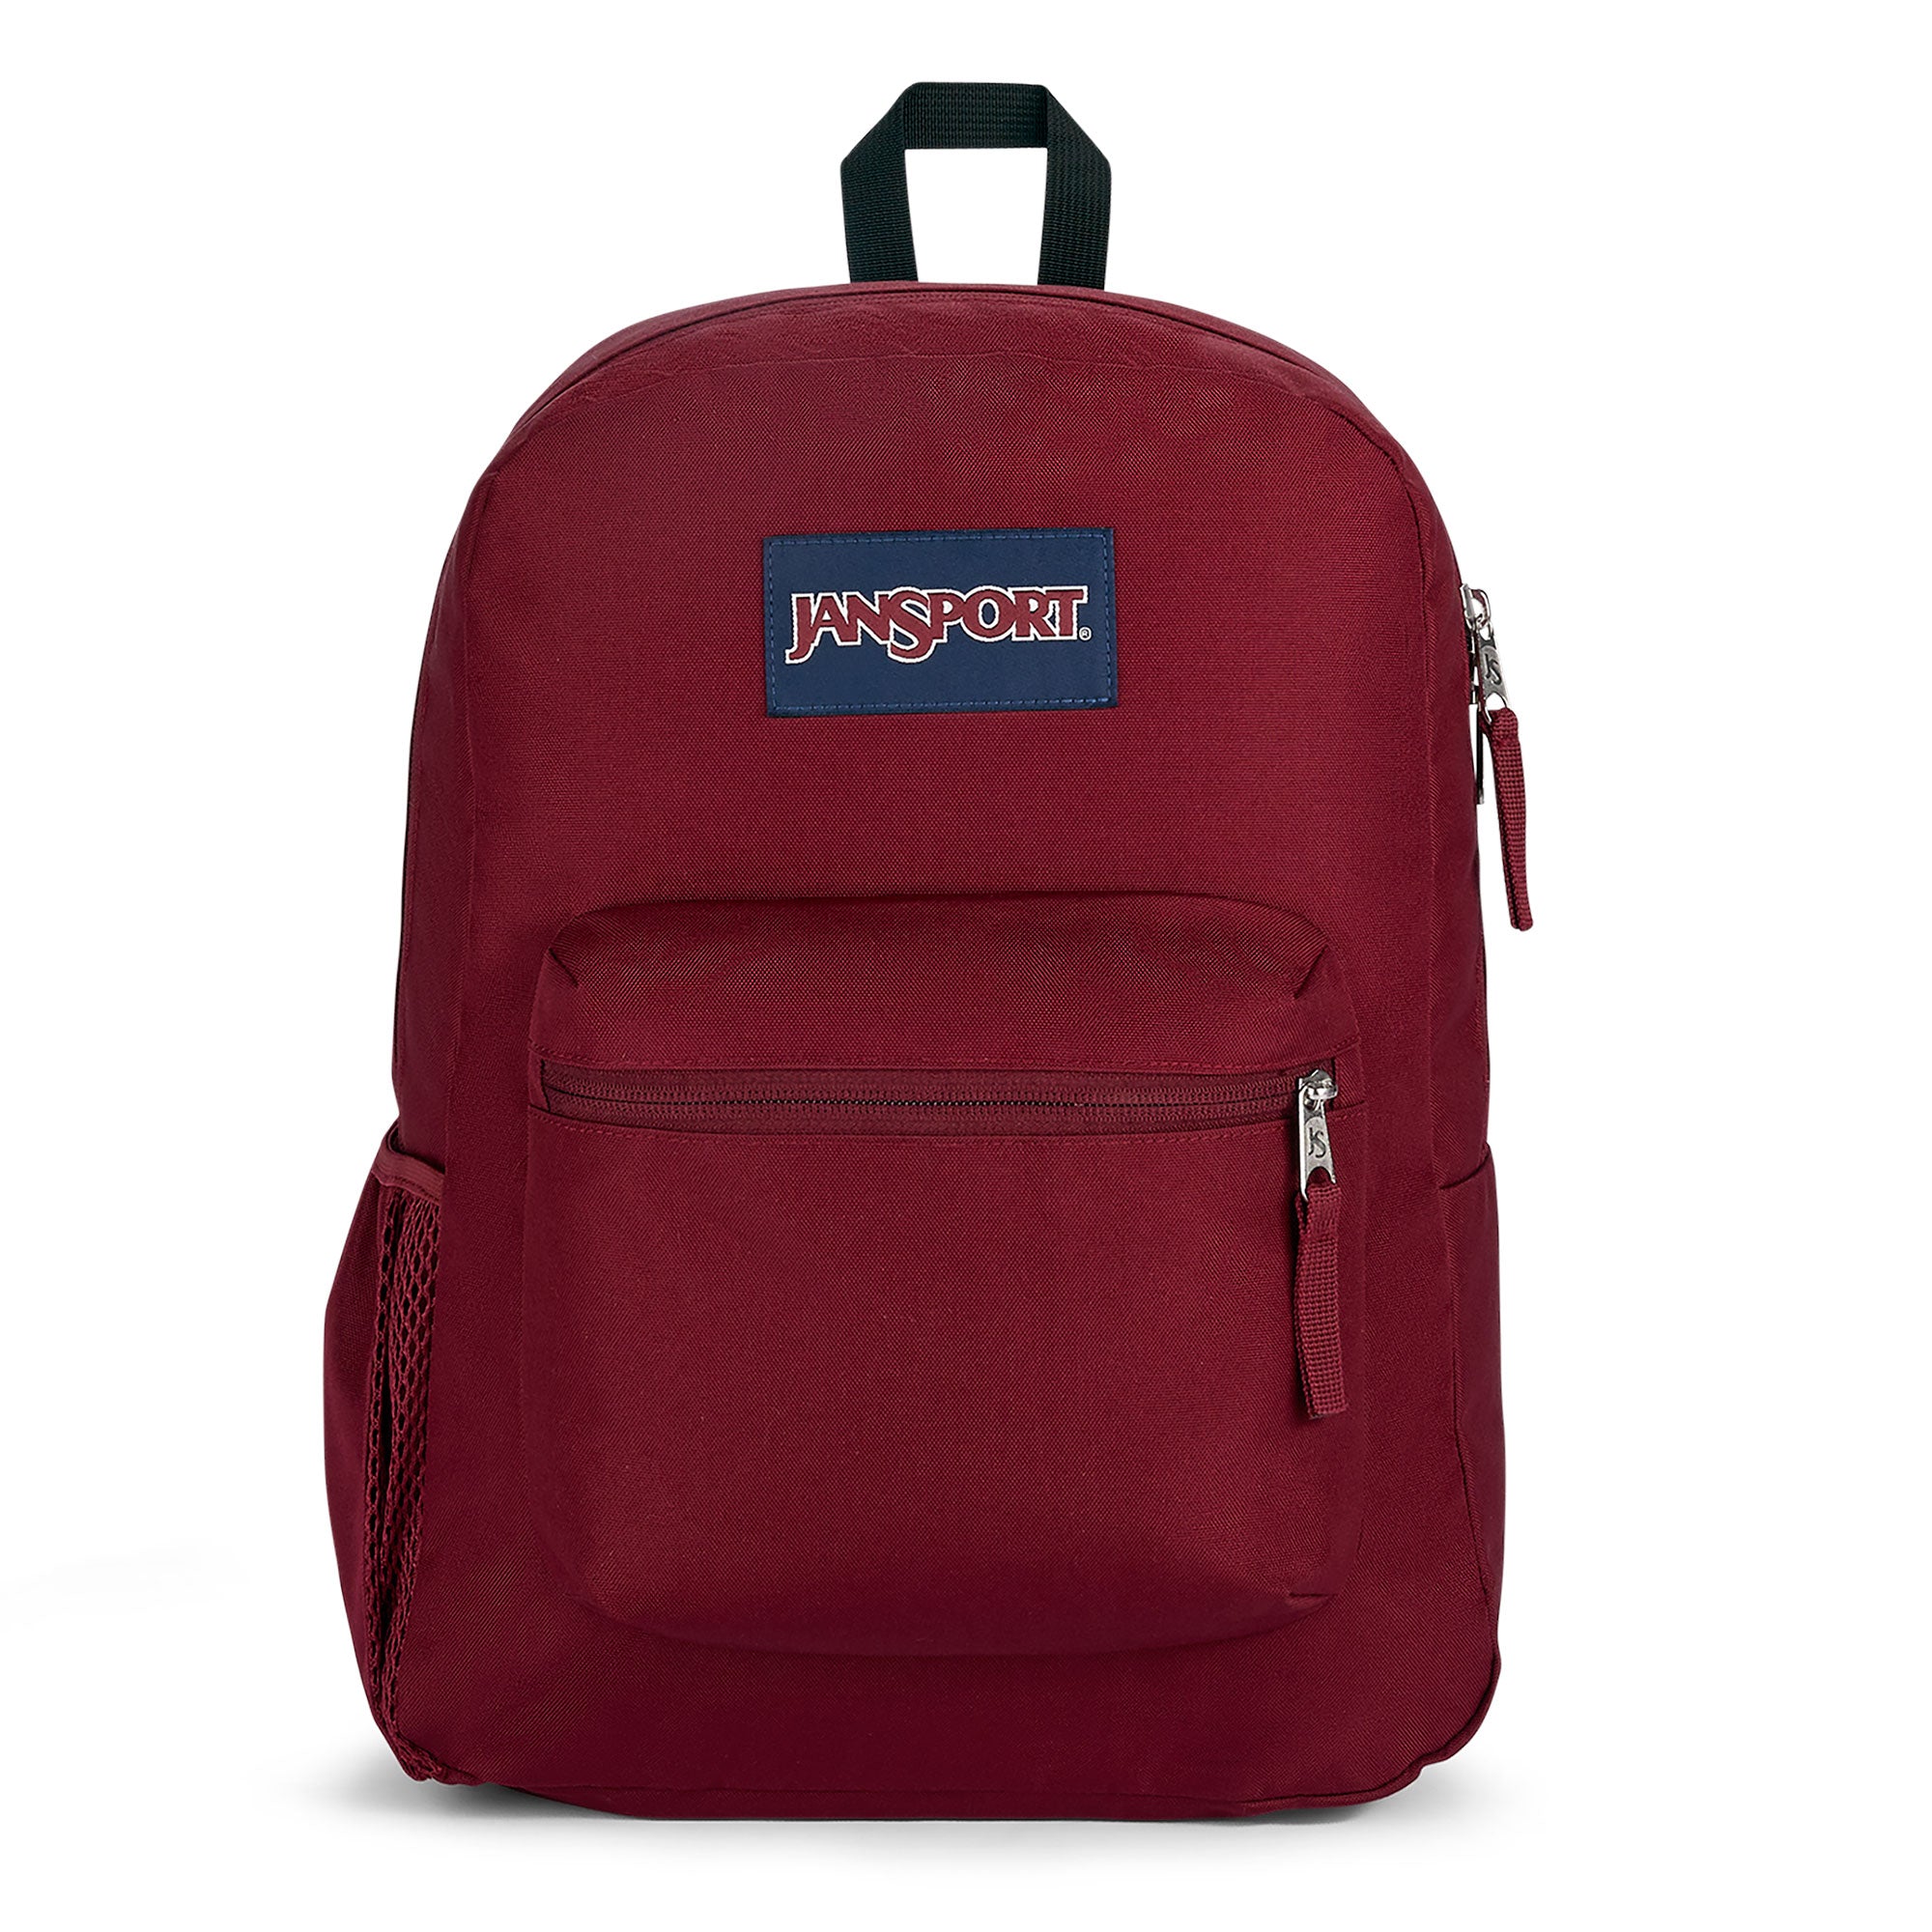 Esportes :: Multisports :: Backpacks :: Champro sports Backpacks :: Scarlet  red Backpacks :: Mochila Champro Prodigy Escarlate